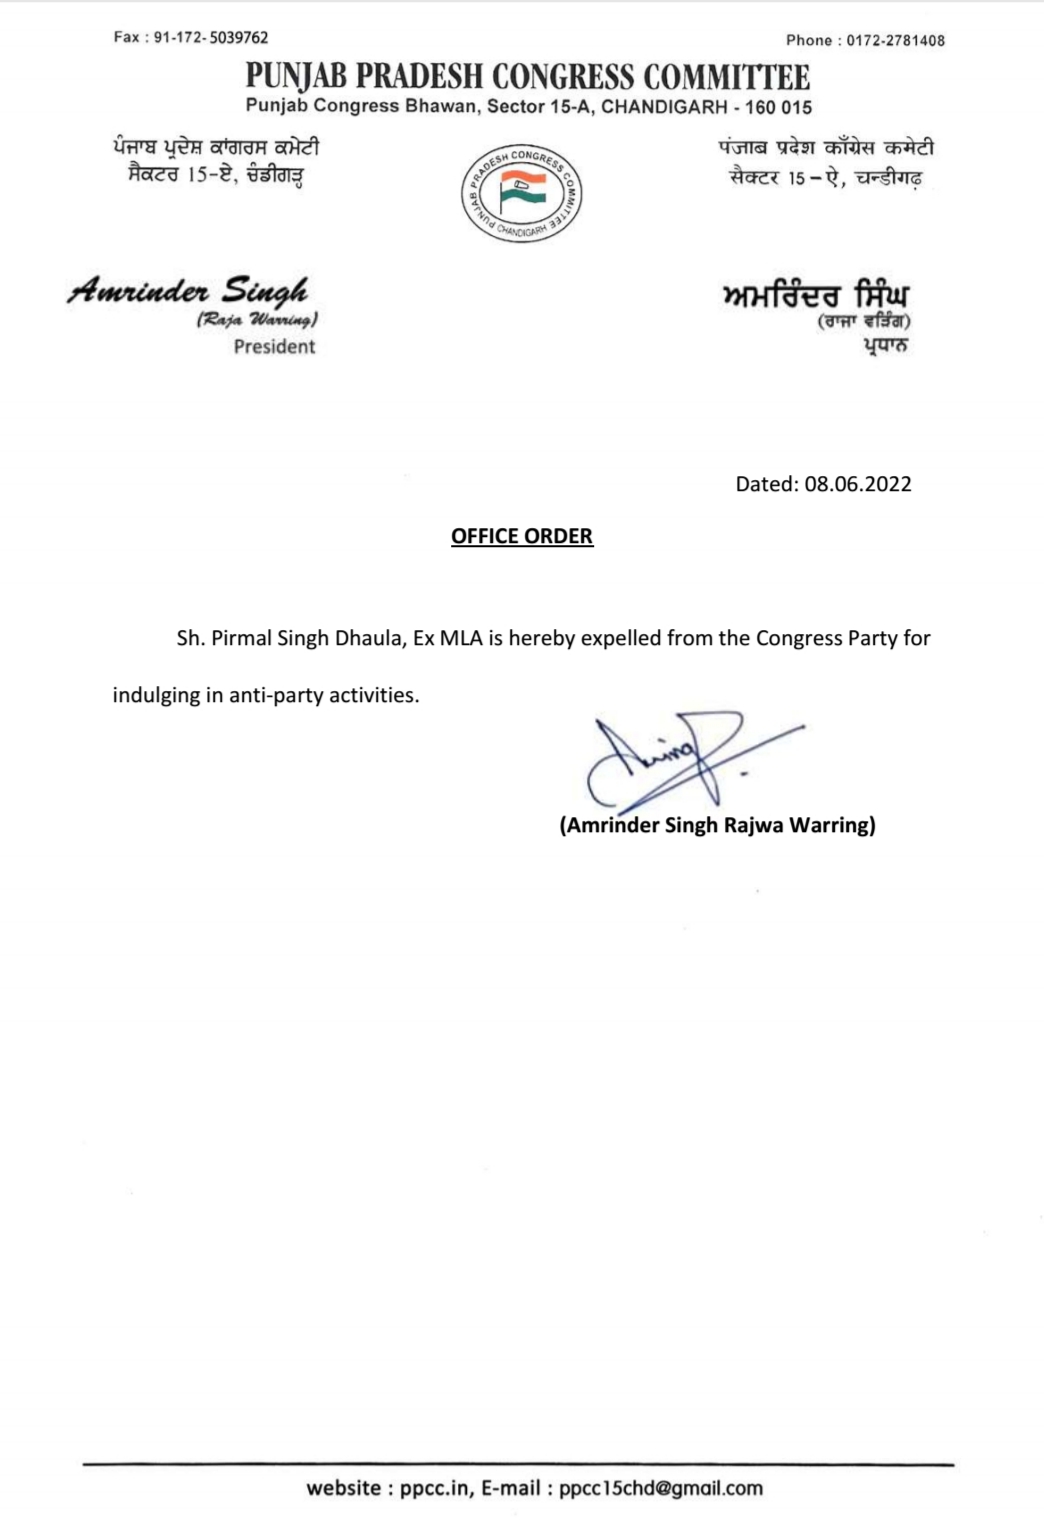 Ex MLA Pirmal Singh Dhaula expelled from Congress